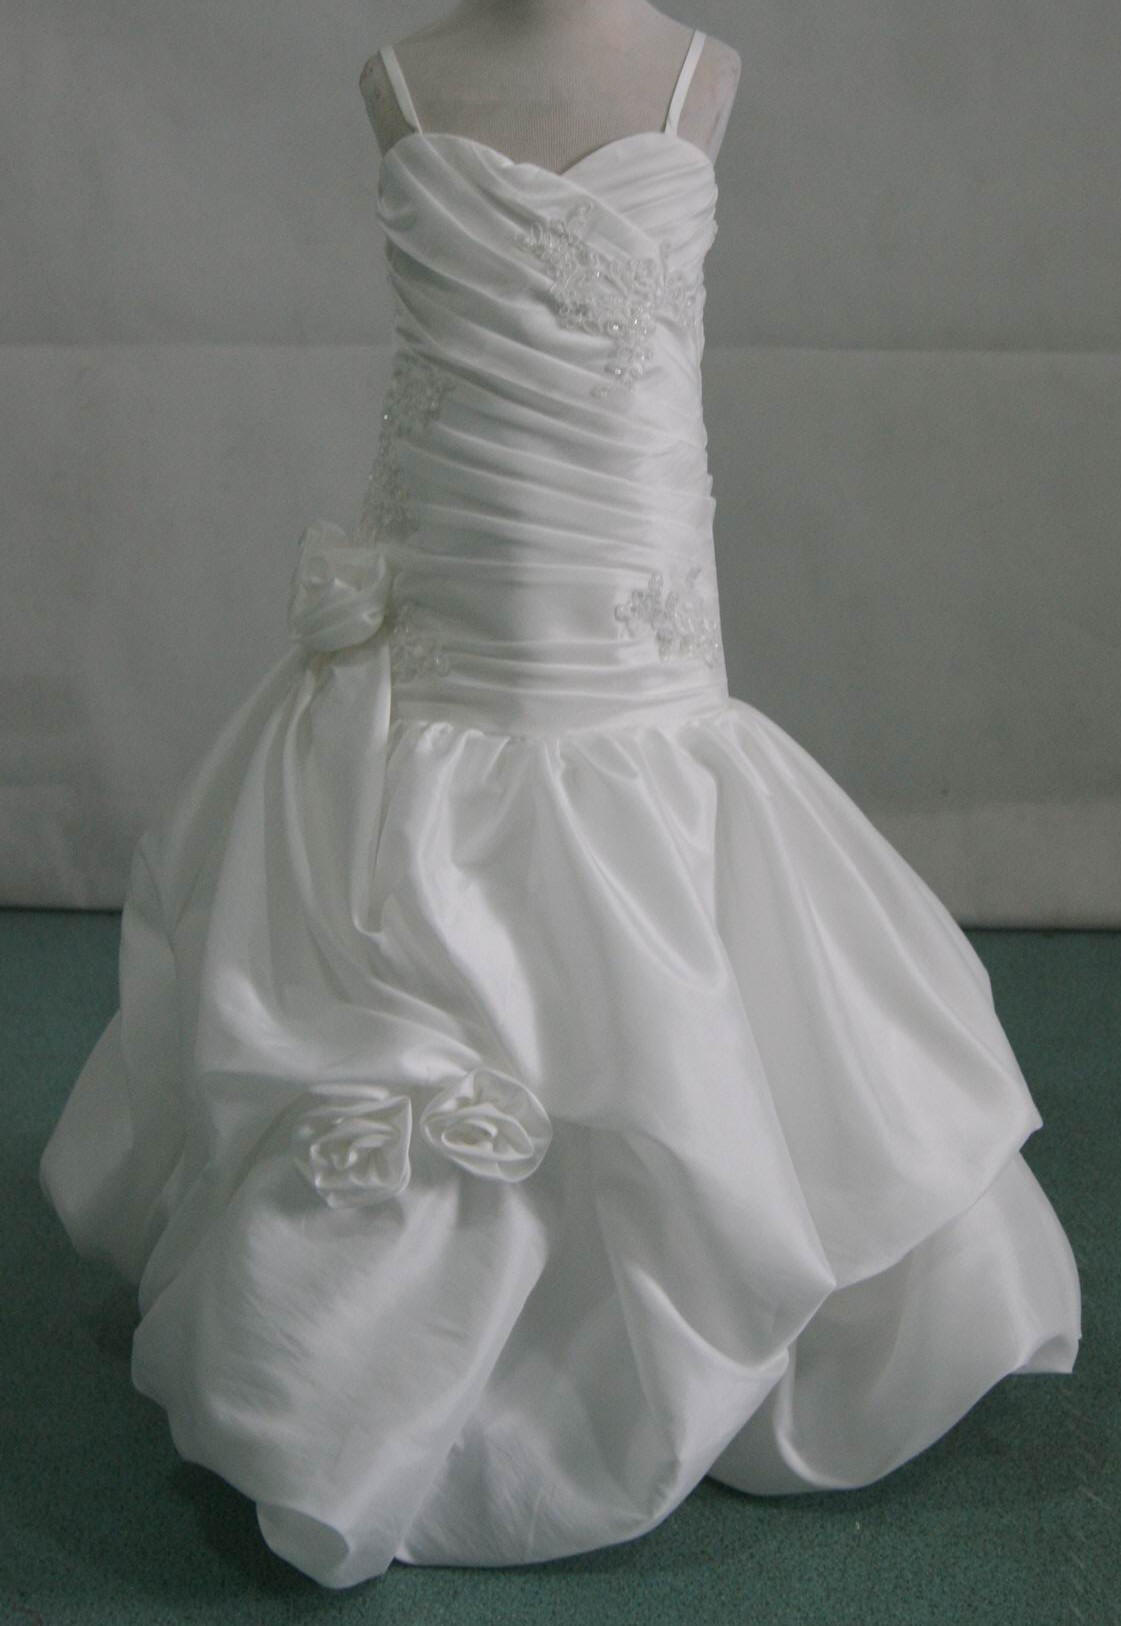 Matching miniature bride wedding dresses